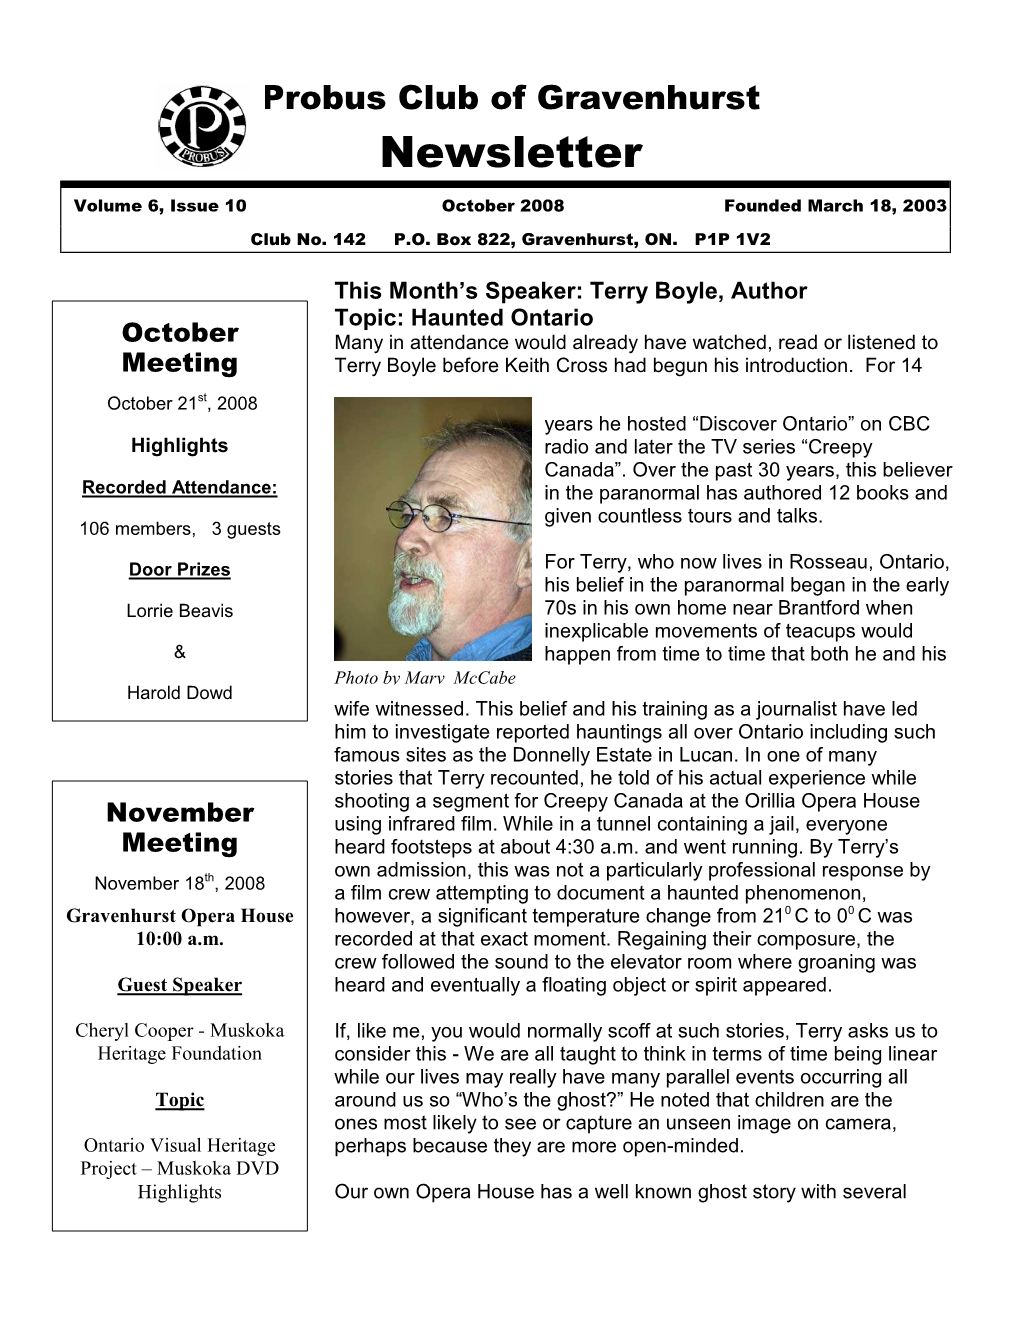 Probus Newsletter-October 2008